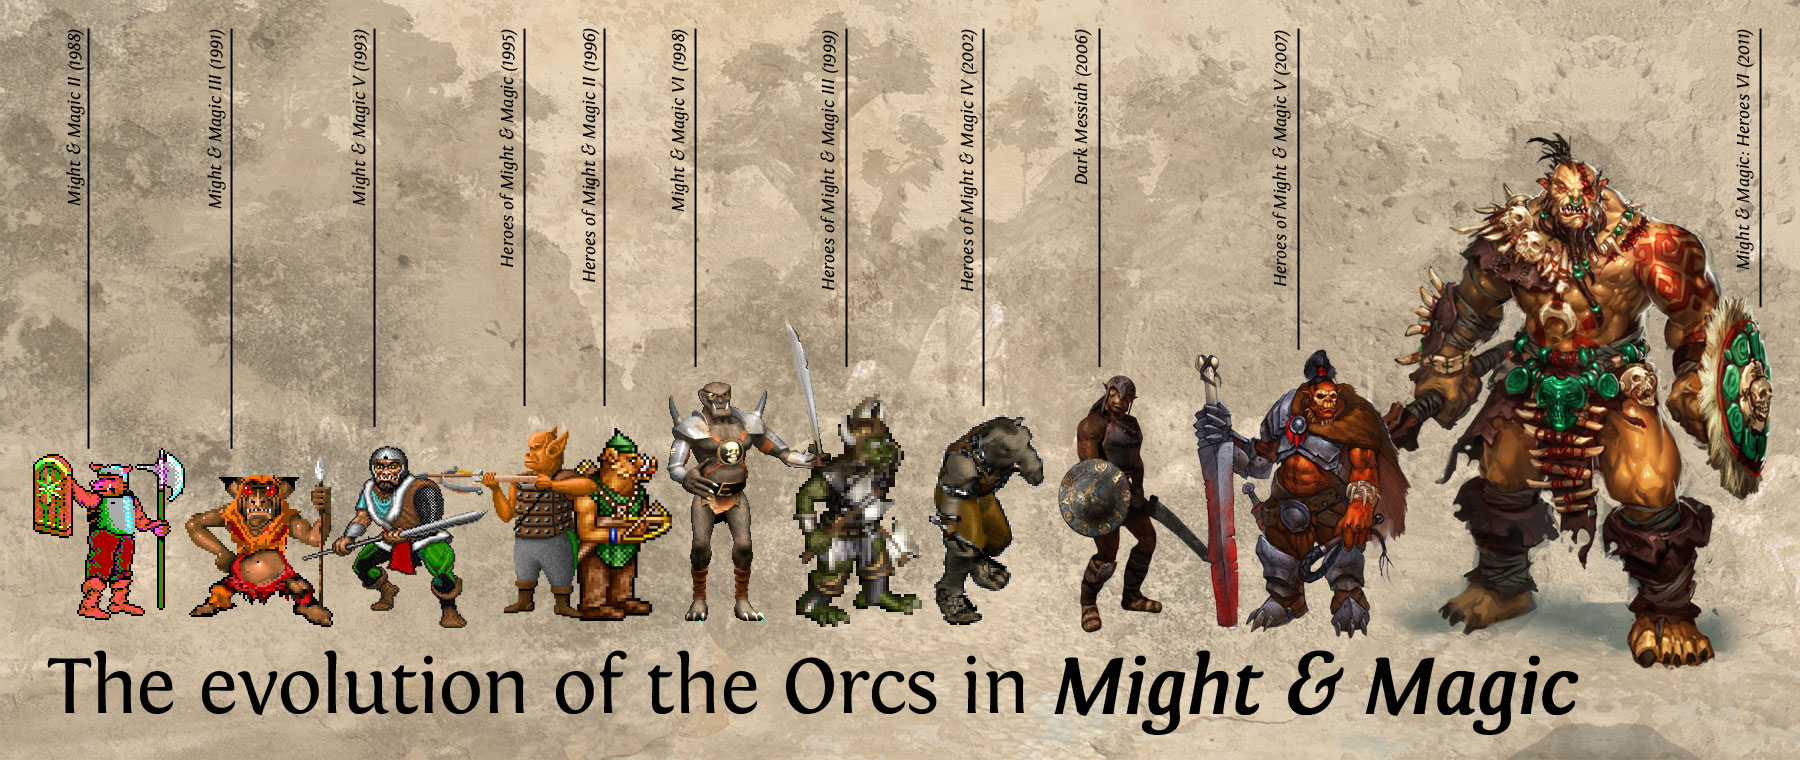 history-of-the-orcs_v2.jpg